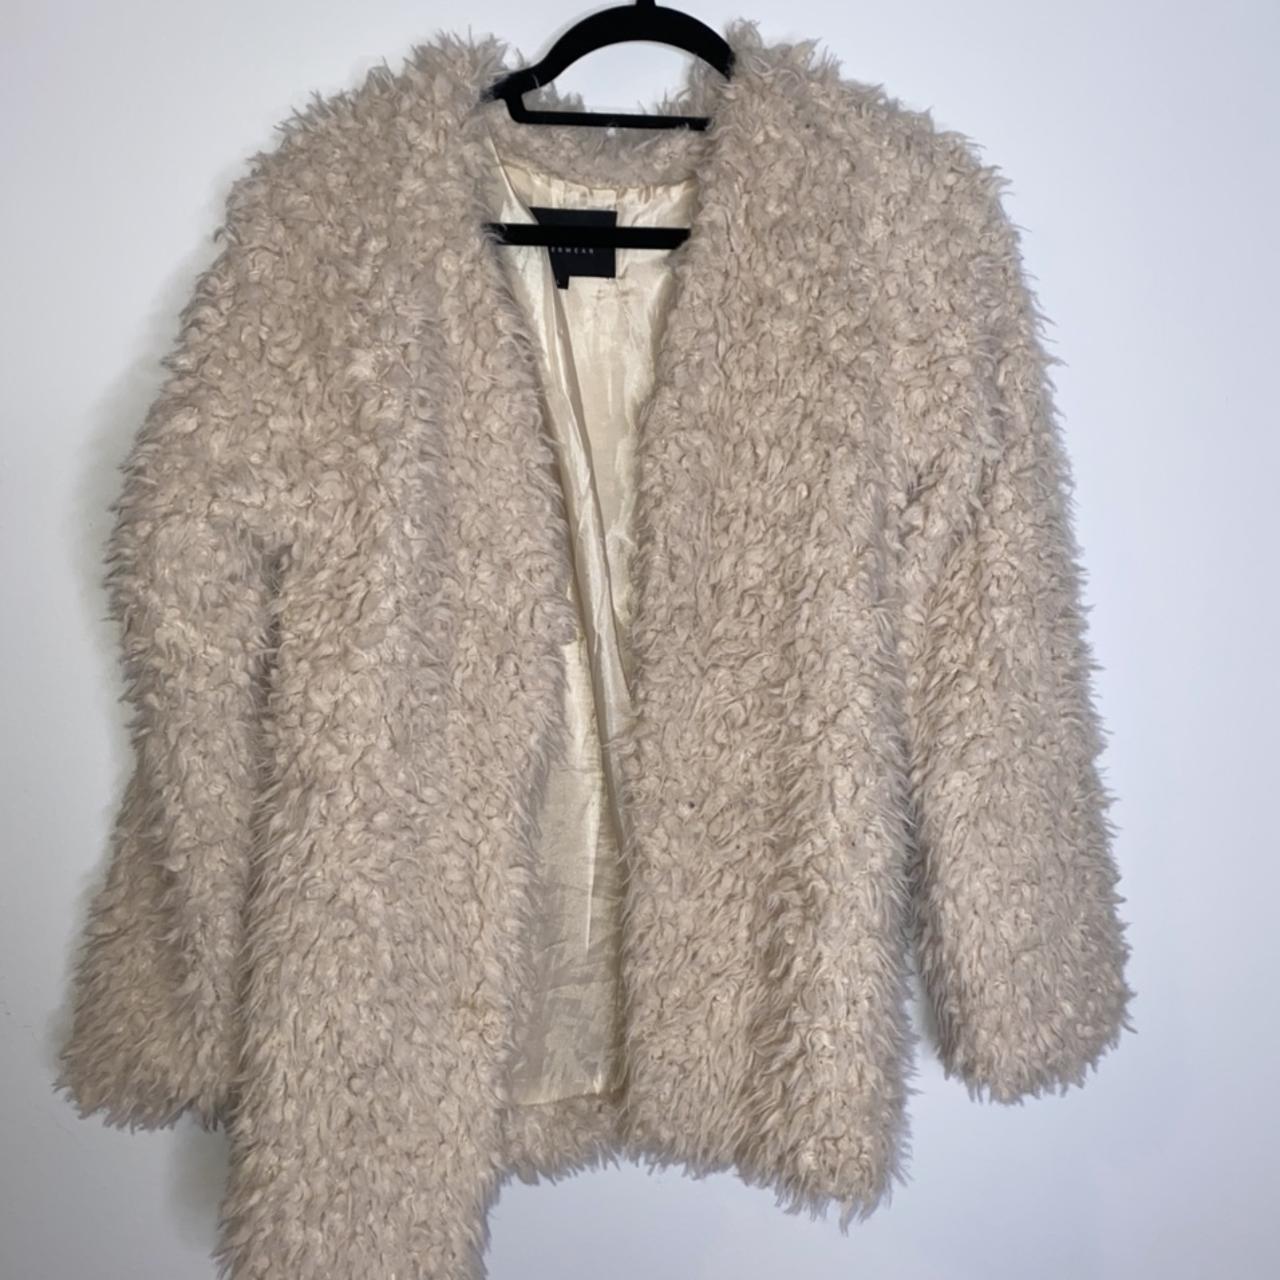 JIWISSI'S 2020 Angora LV (Louis Vuitton) Fur Coat - Depop